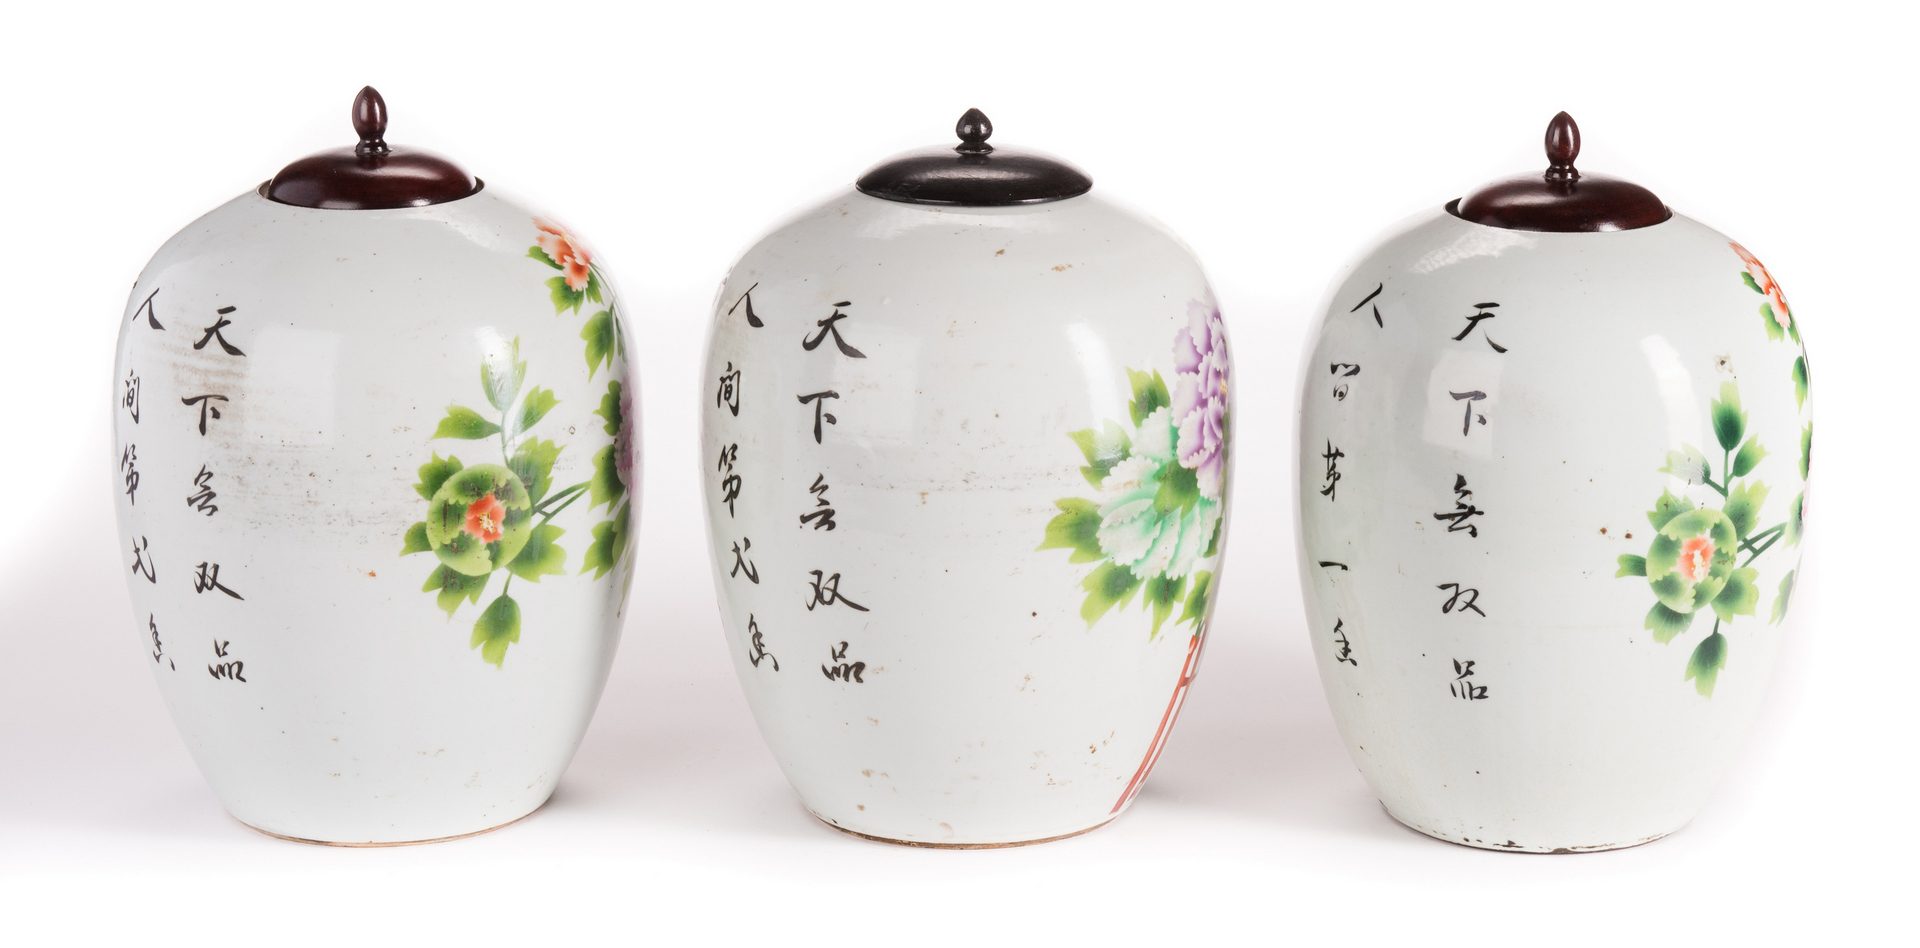 Lot 186: 3 Chinese Porcelain Ginger Jars w/Peonies